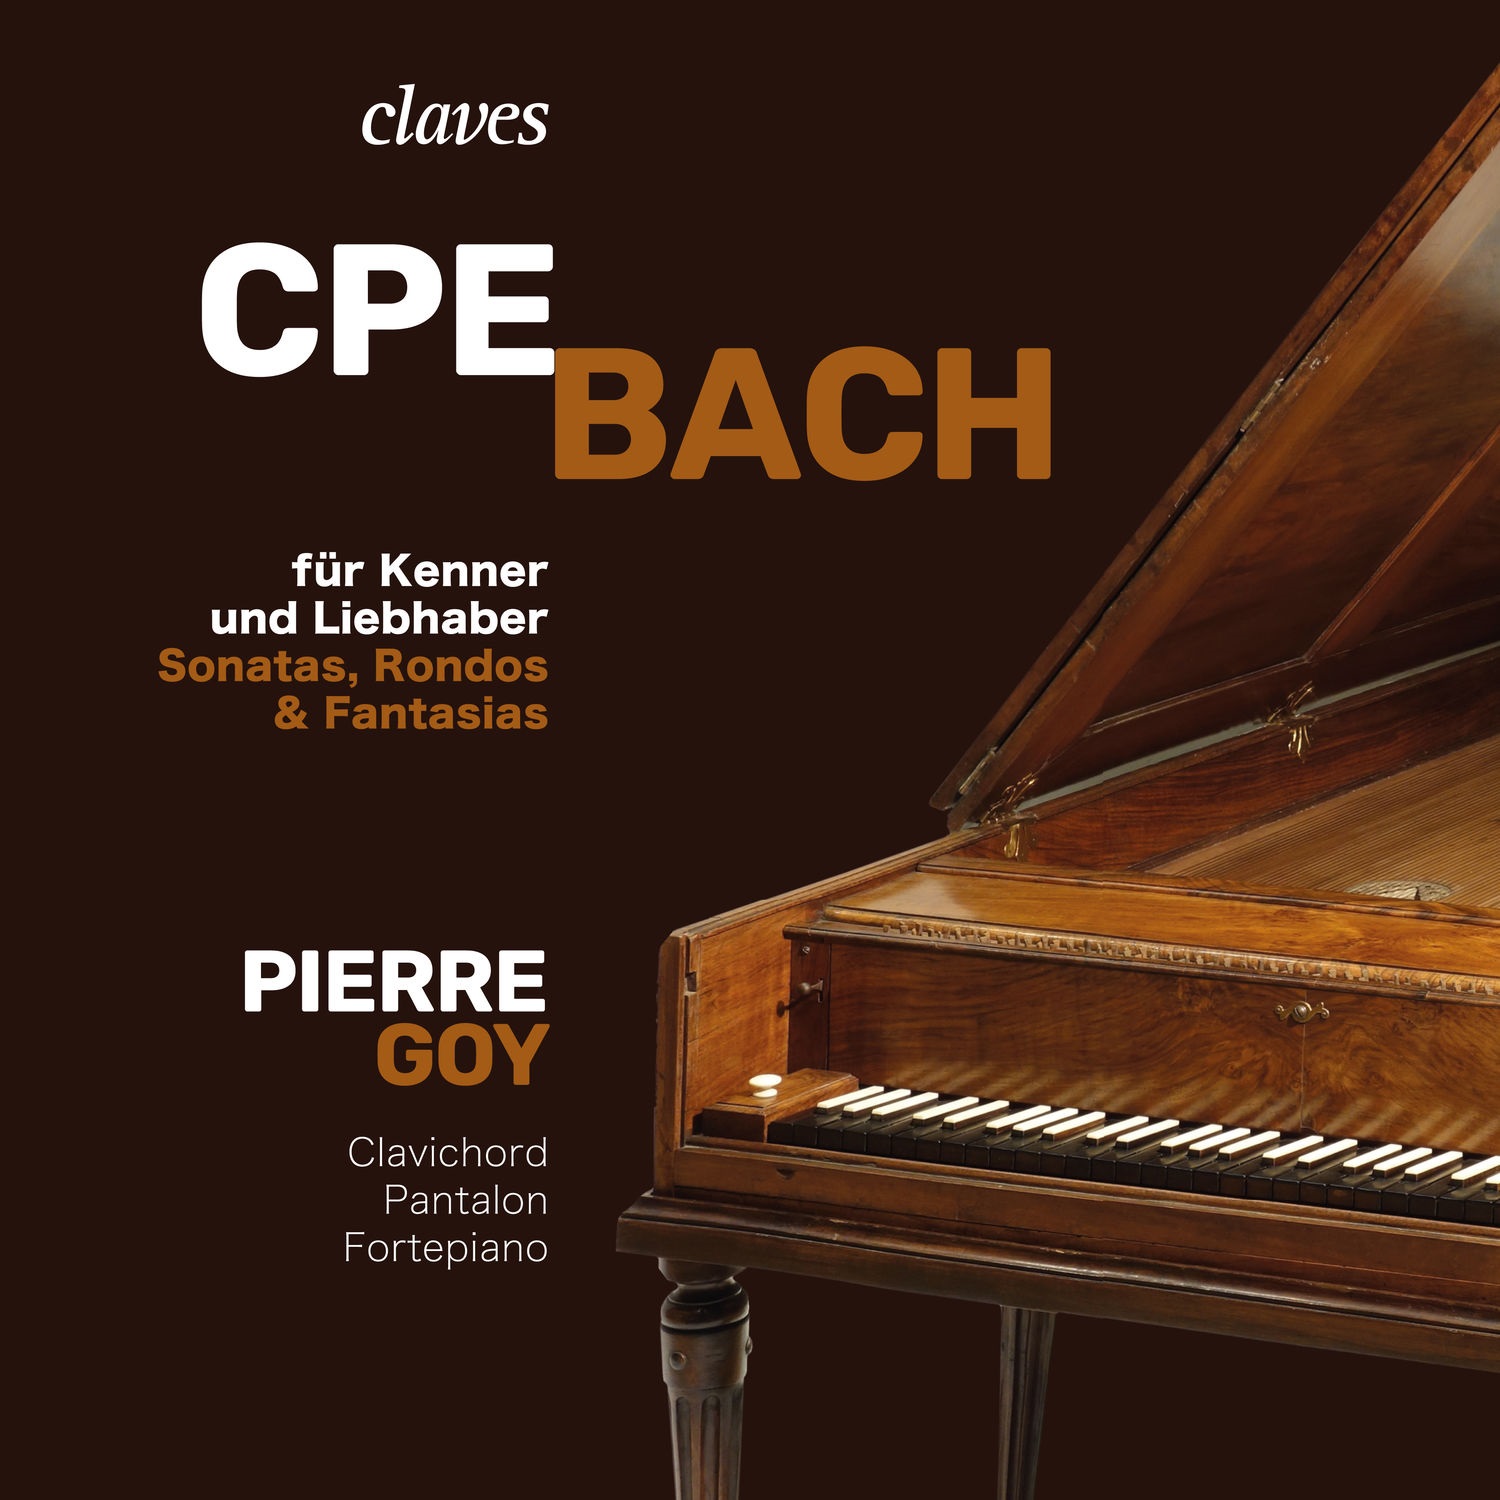 Pierre Goy - CPE Bach: fur Kenner und Liebhaber, Sonatas, Rondos & Fantasias (2020) [FLAC 24bit/96kHz]